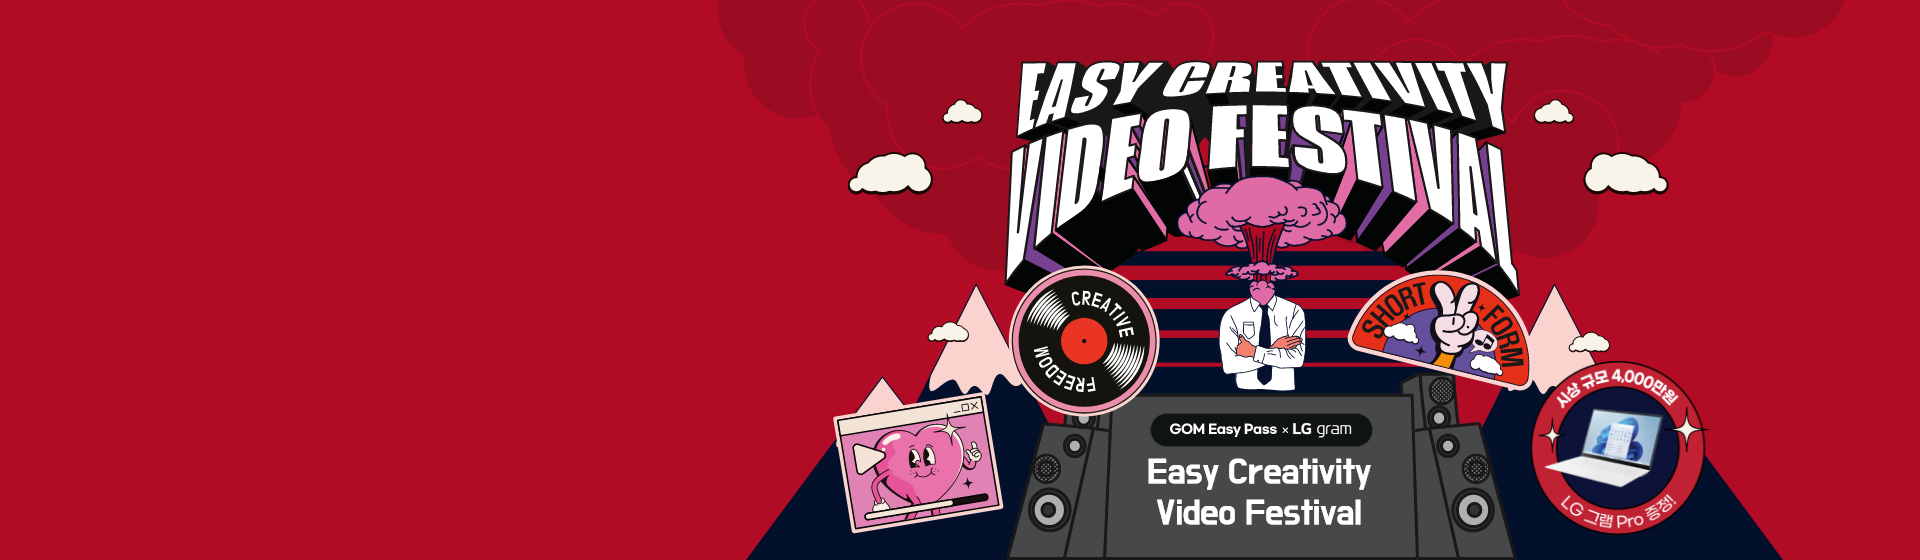 EASY CREATIVITY VIDEO FESTIBAL GOM Easy Pass x LG gram Easy Creativity Video Festival, 총 시상금 4,000만원, LG 그램 Pro 증정!